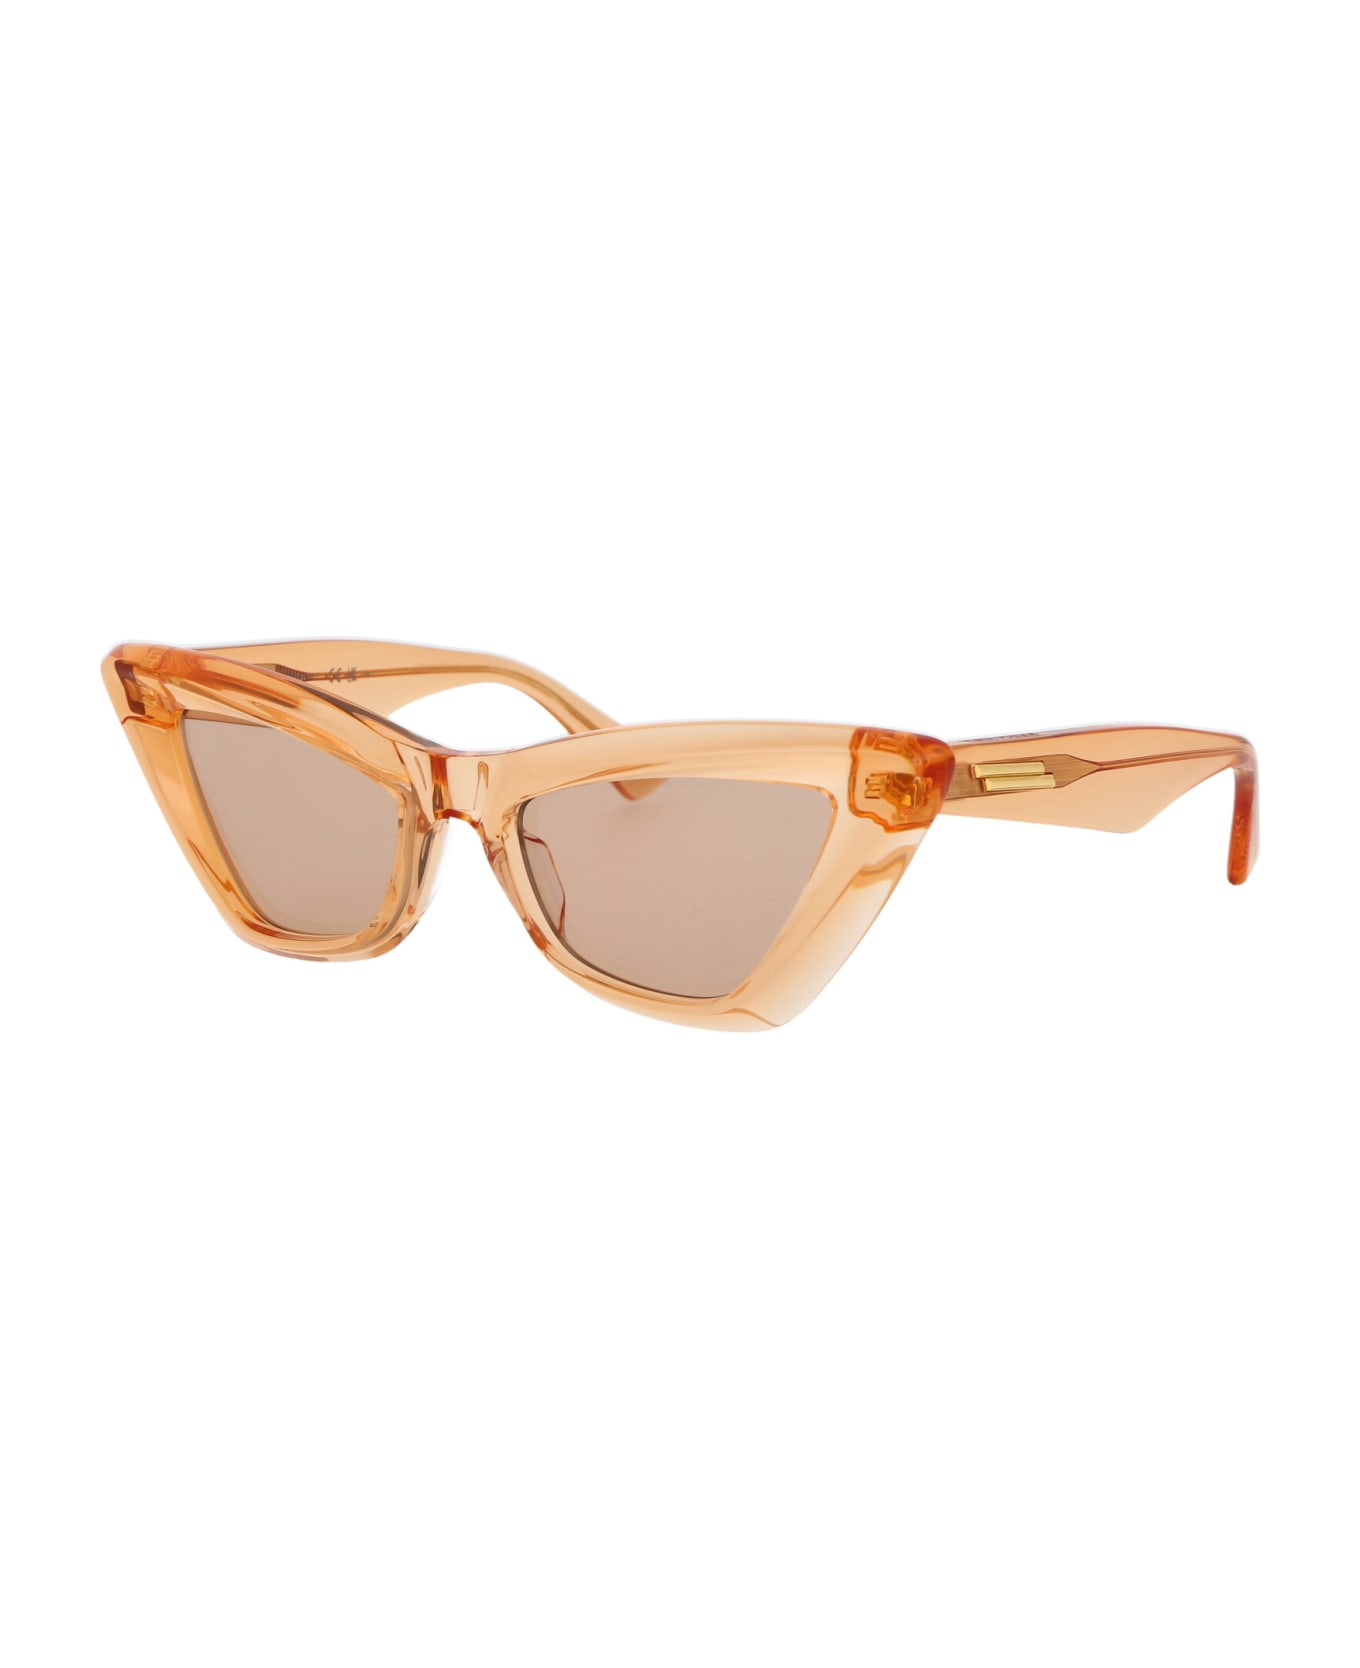 Bottega Veneta Eyewear Bv1101s Sunglasses - 011 ORANGE ORANGE BROWN